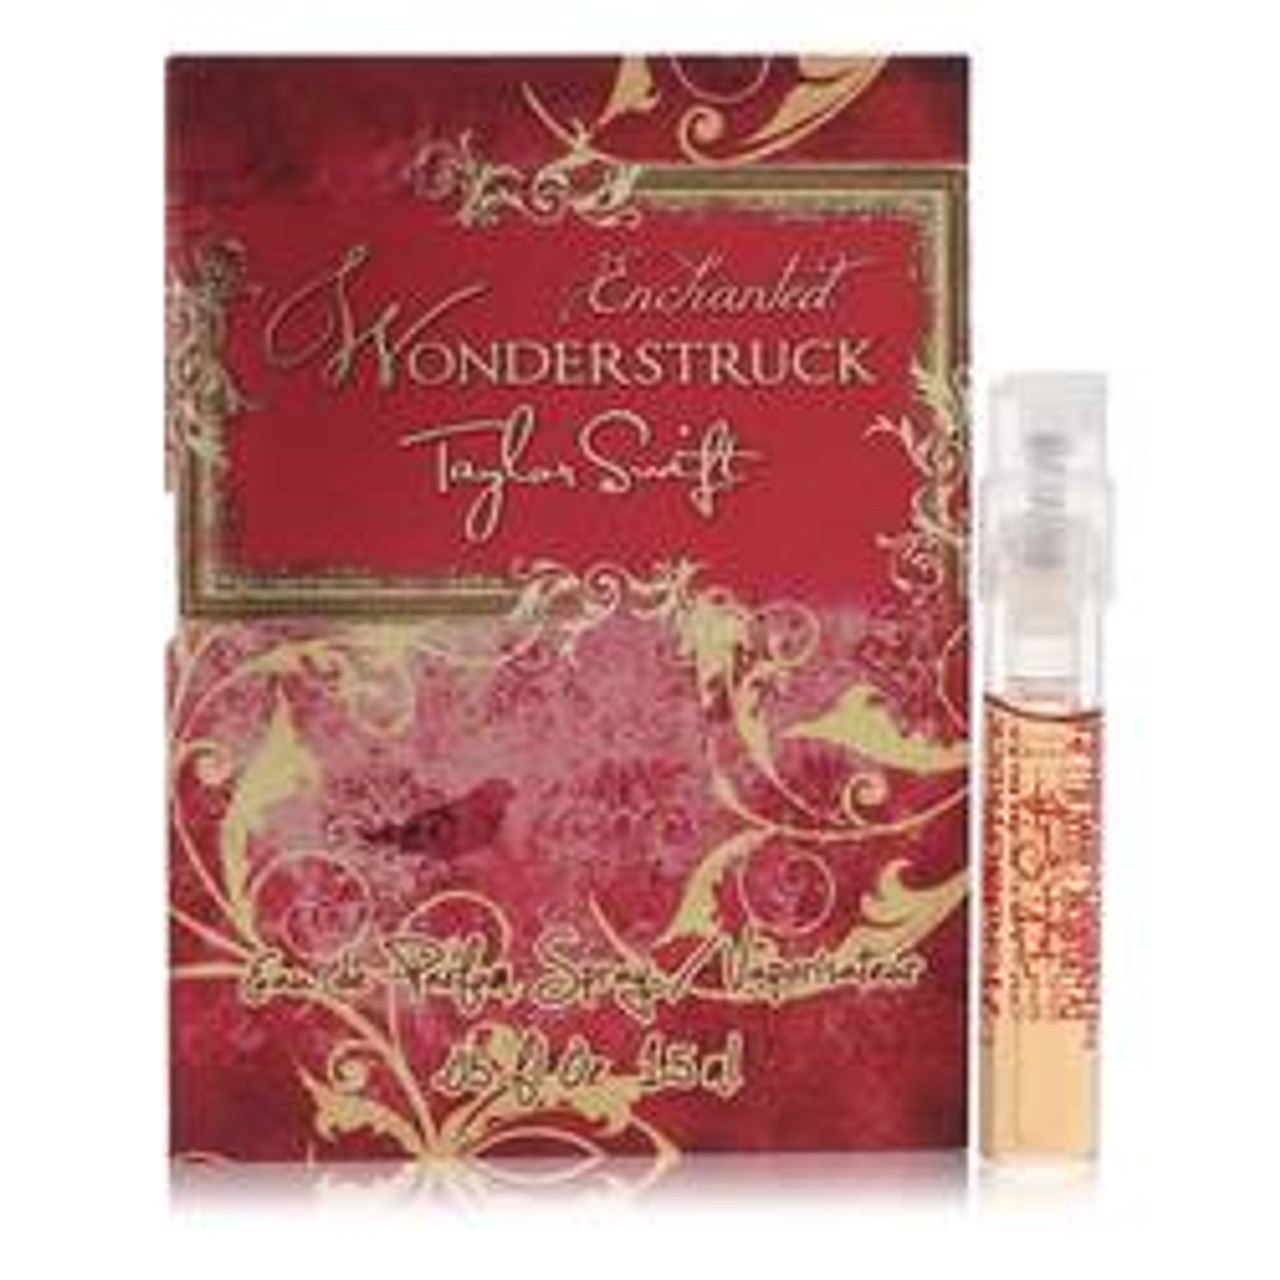 Wonderstruck Enchanted Perfume By Taylor Swift Vial (sample) 0.05 oz for Women - *Pre-Order